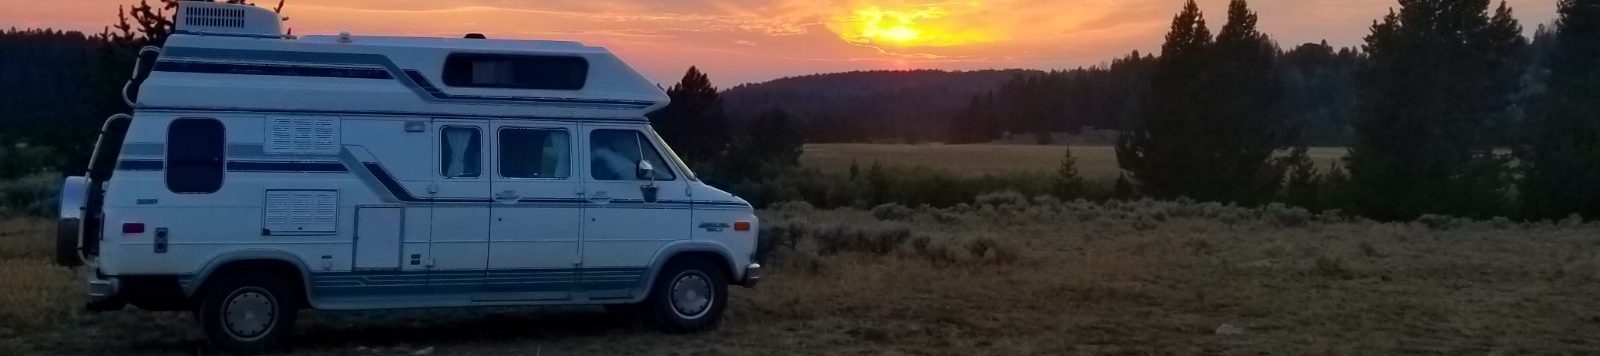 campervan sunset